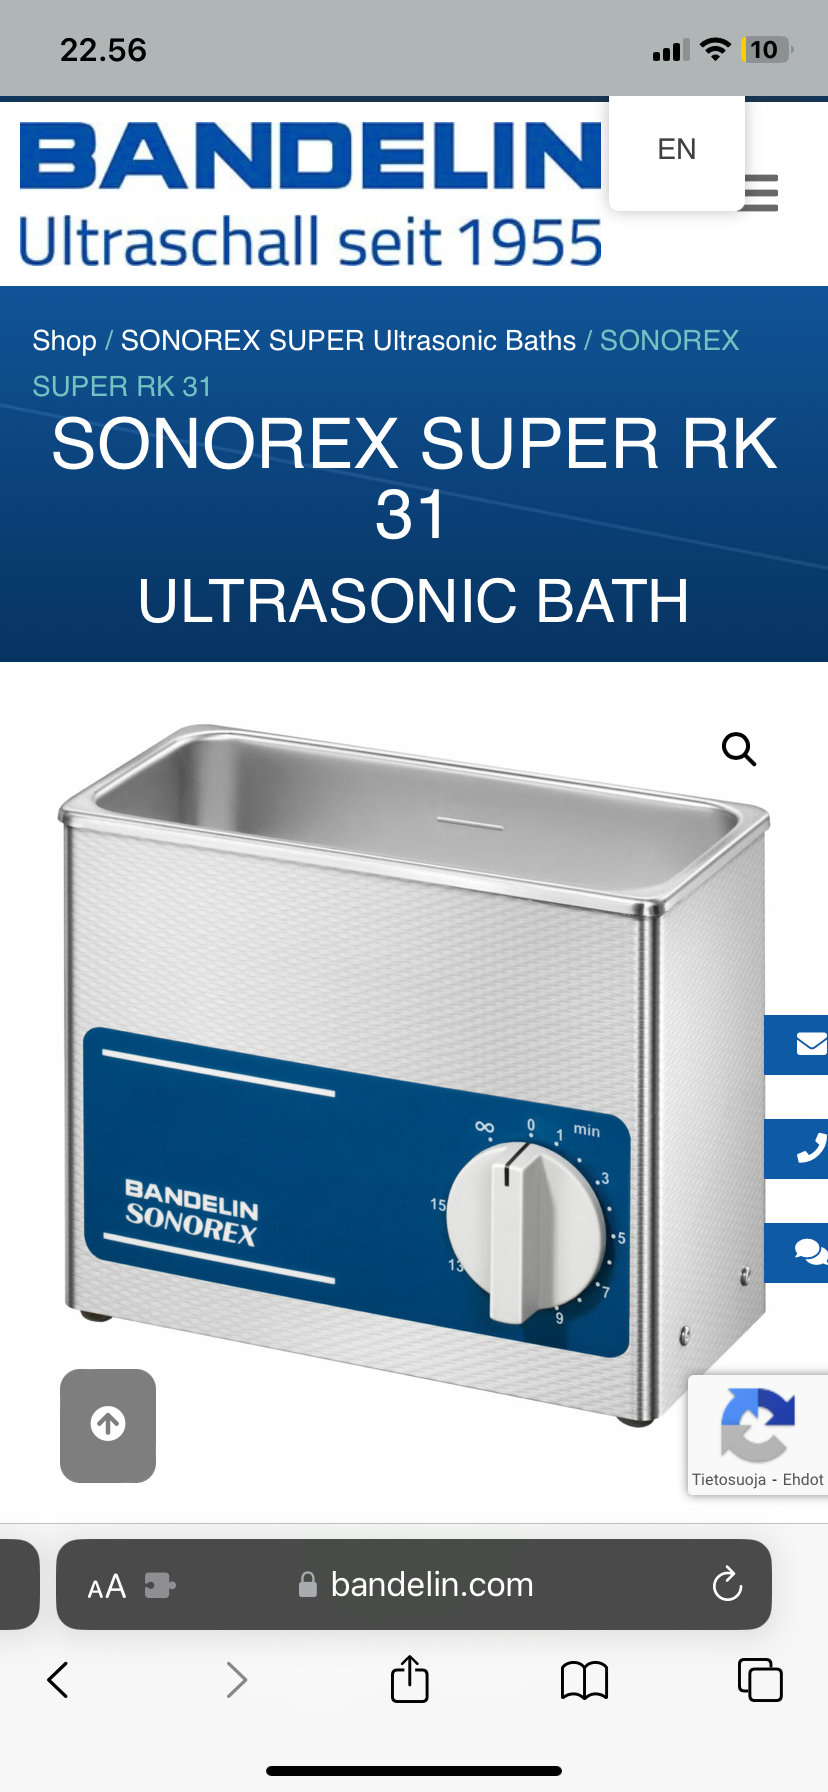 sonorex super rk 31 ultrasonic bath